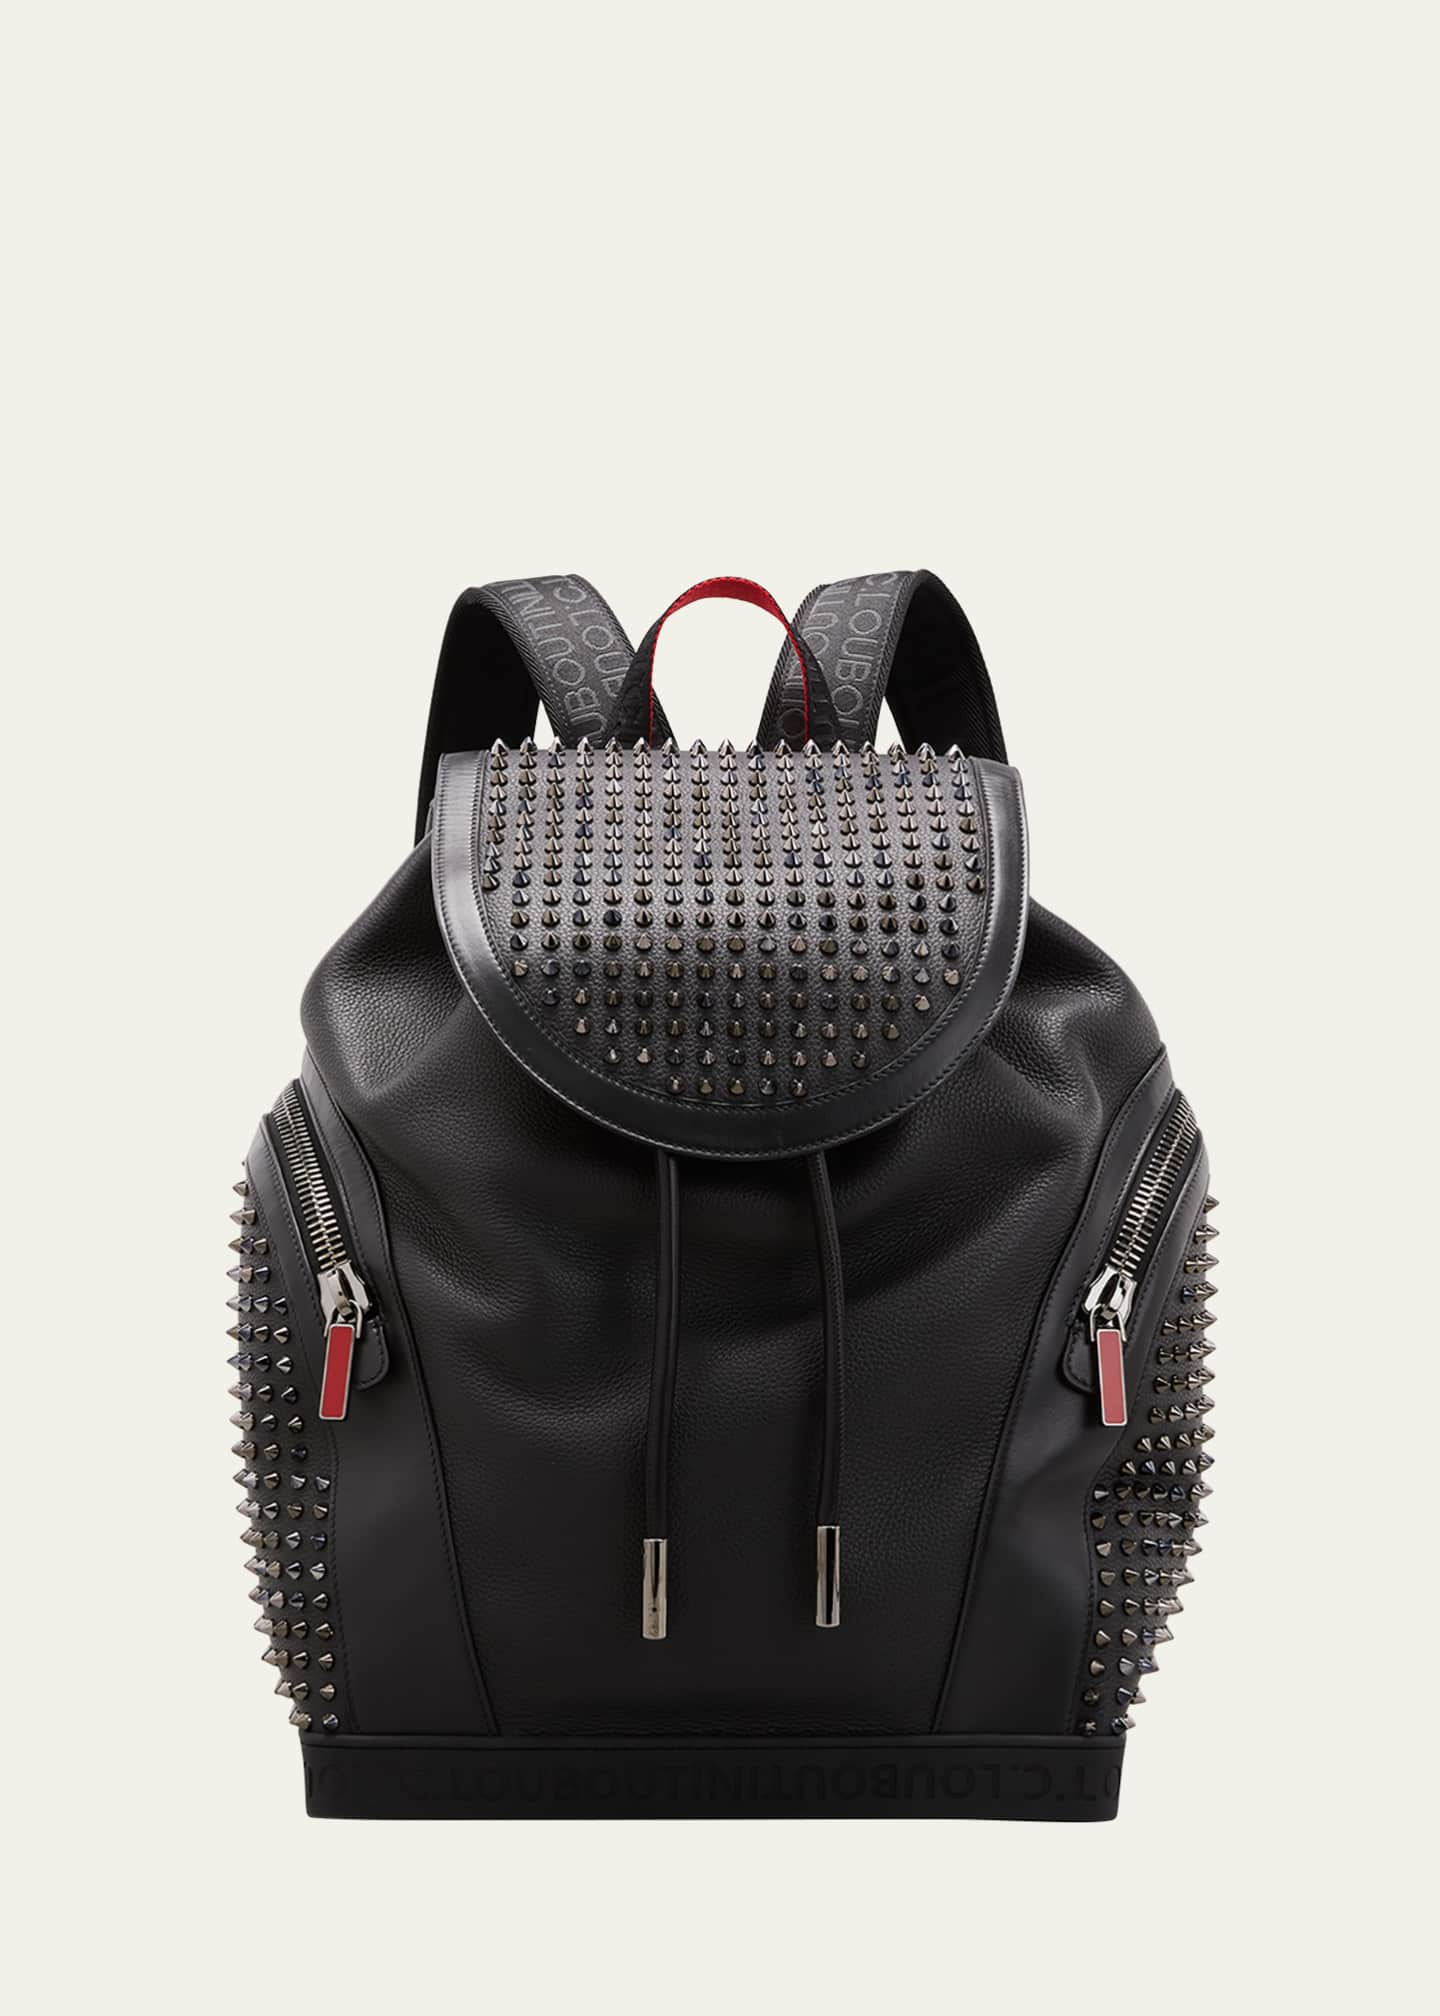 Black Explorafunk spikes leather cross-body bag, Christian Louboutin